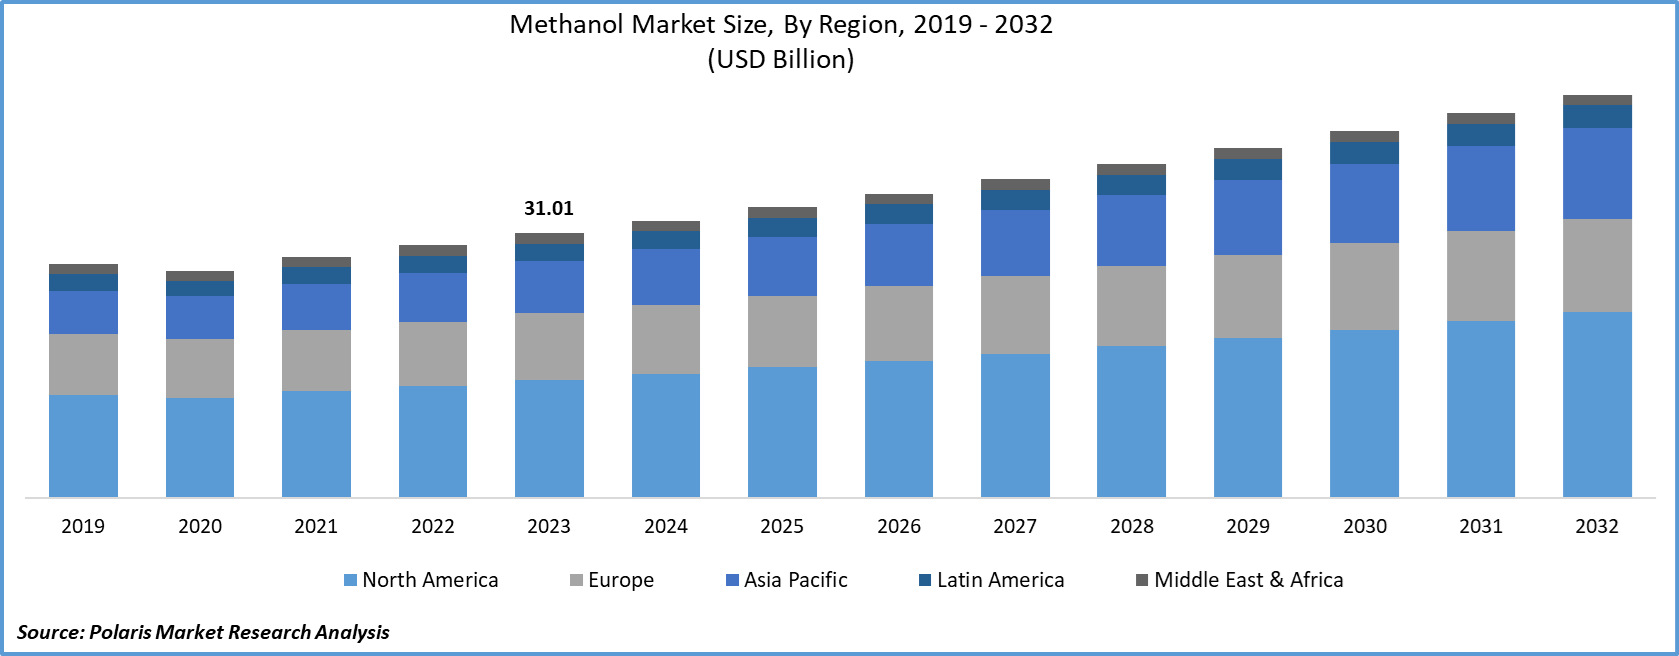 Methanol Market Size